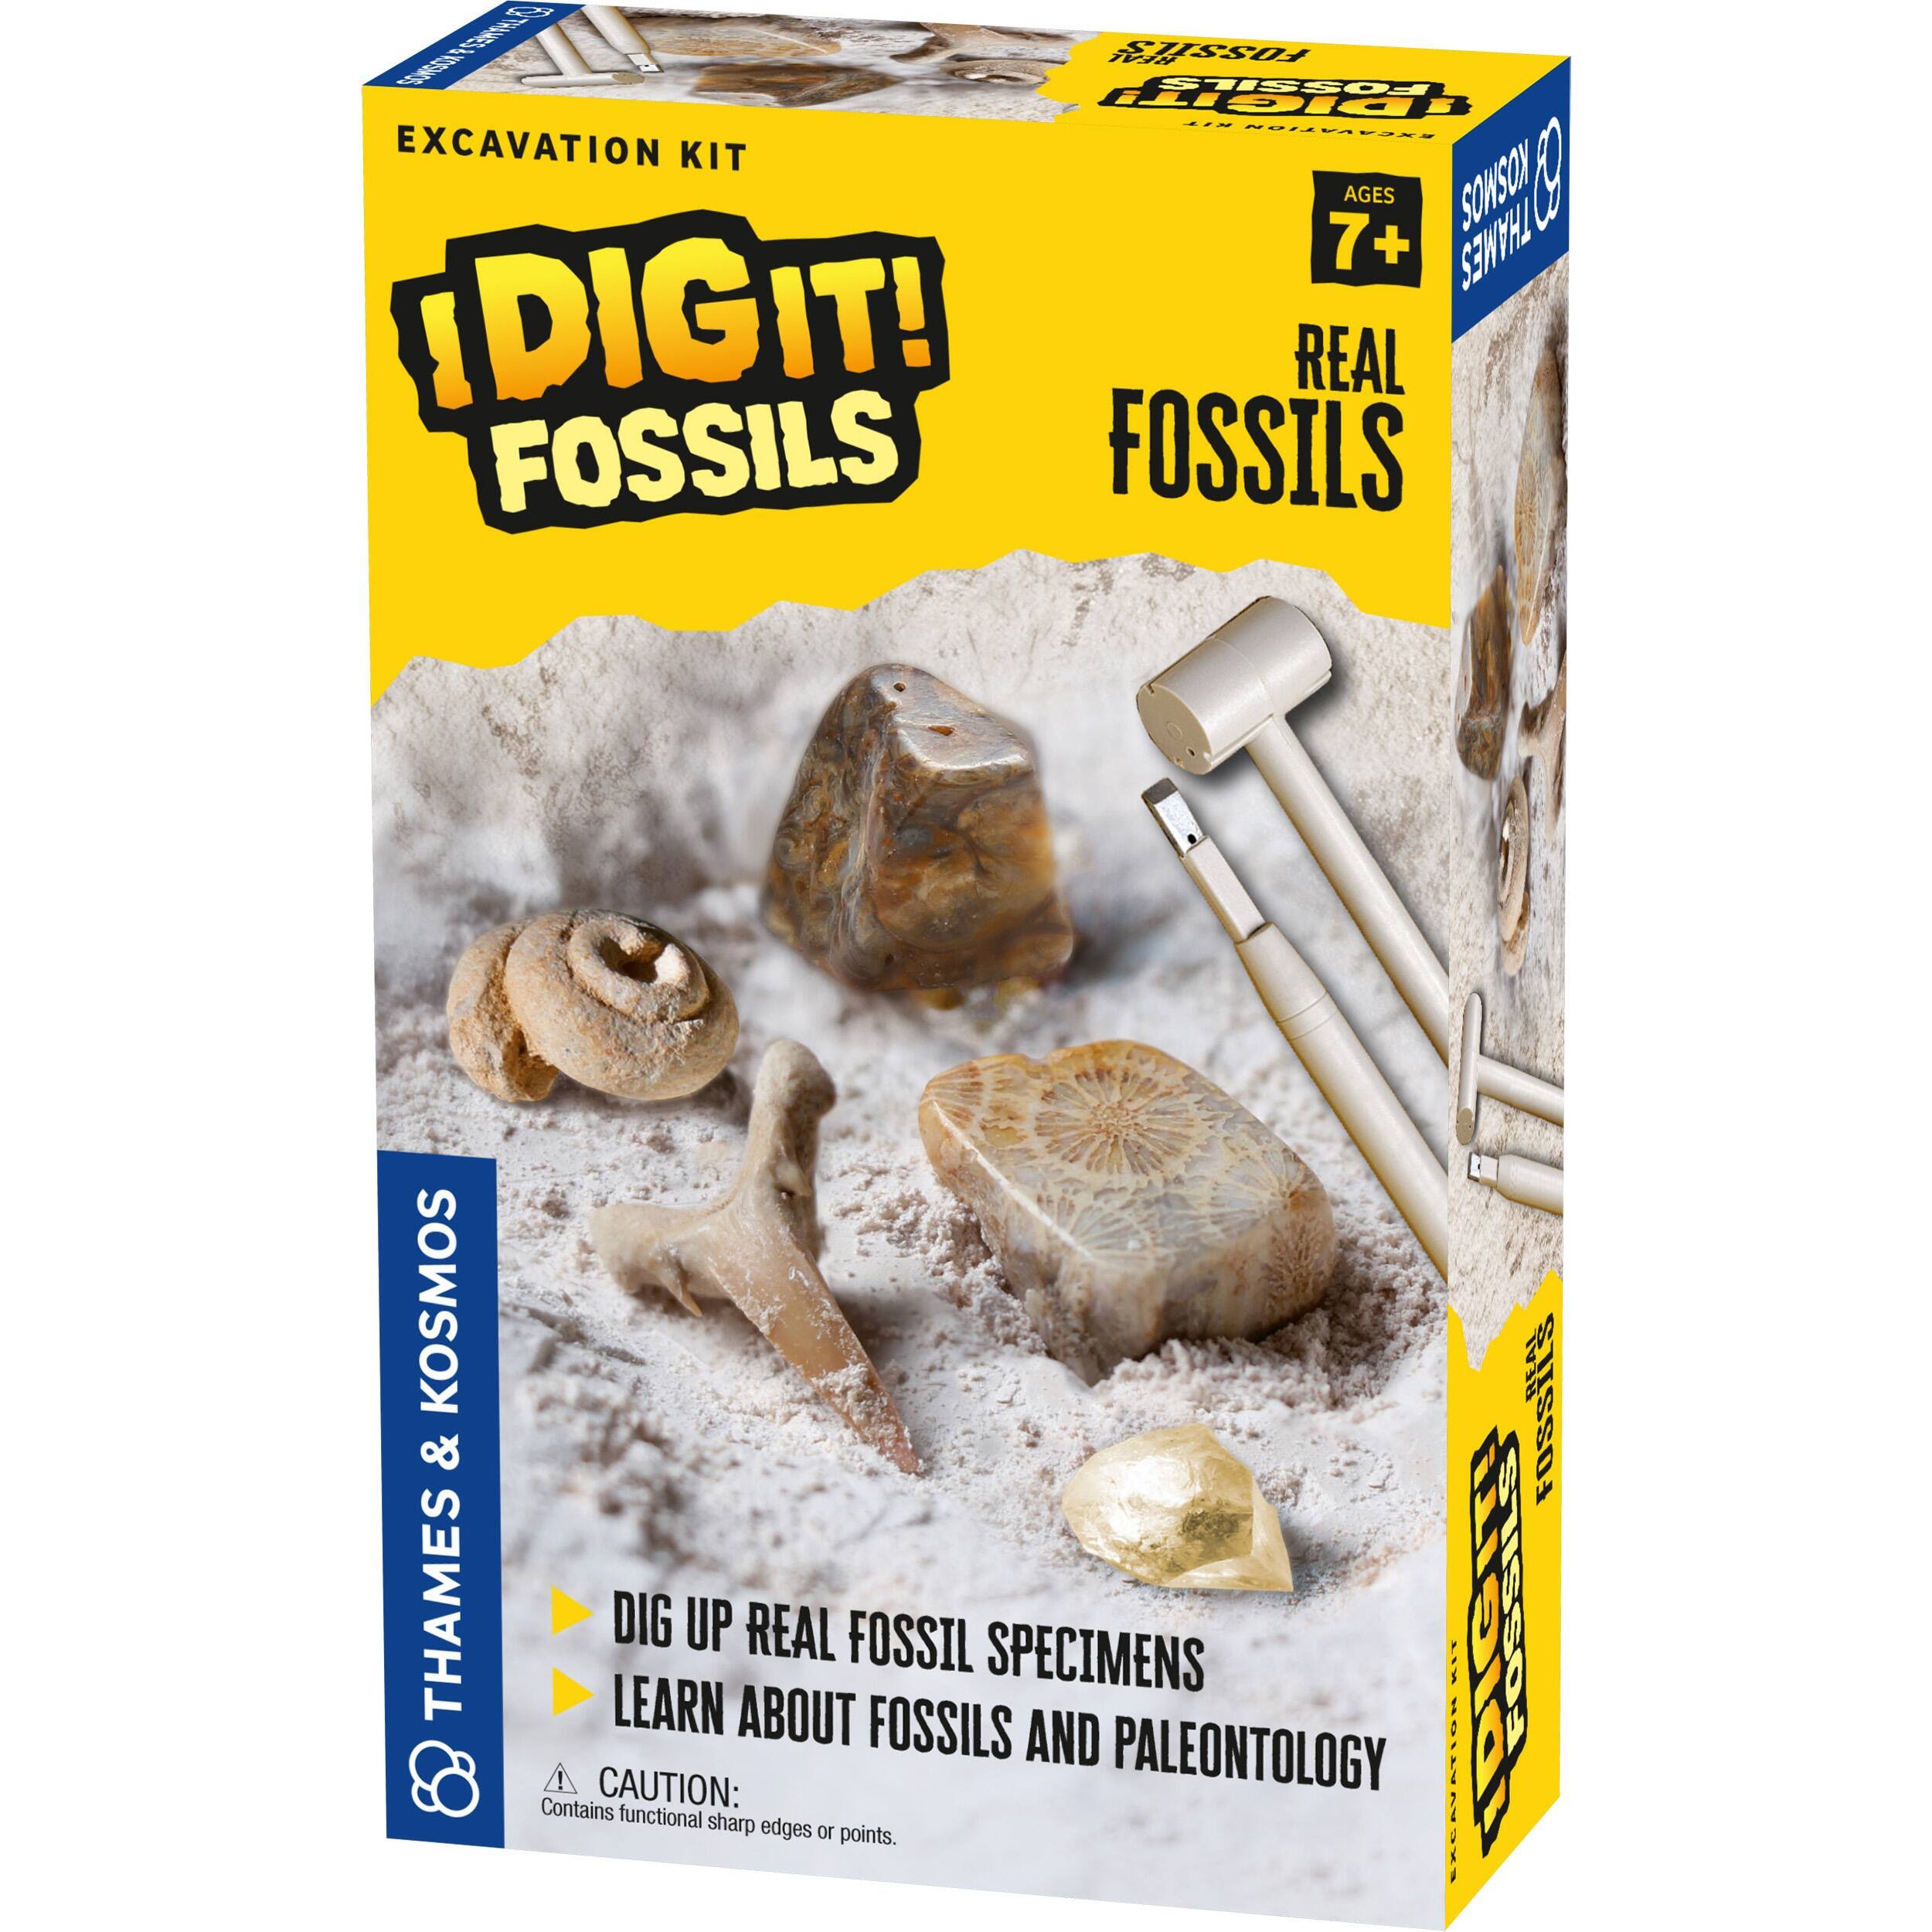 Thames & Kosmos 630461 I Dig It! Fossils - Real Fossils Excavation Kit